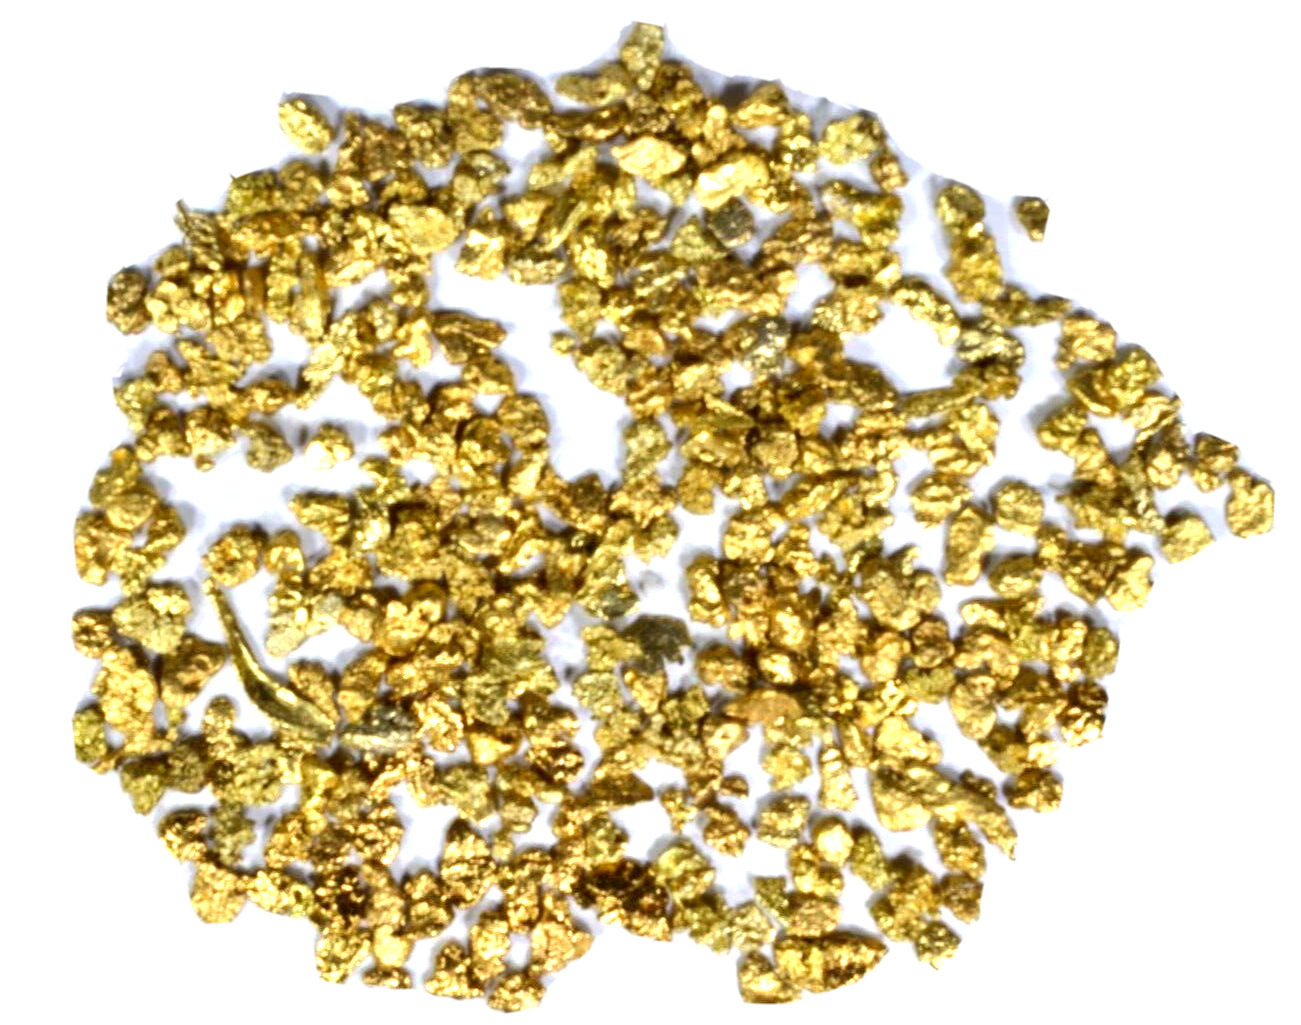 10.000 GRAMS ALASKAN YUKON BC NATURAL PURE GOLD NUGGETS #10 MESH - LIQUID BULLION 